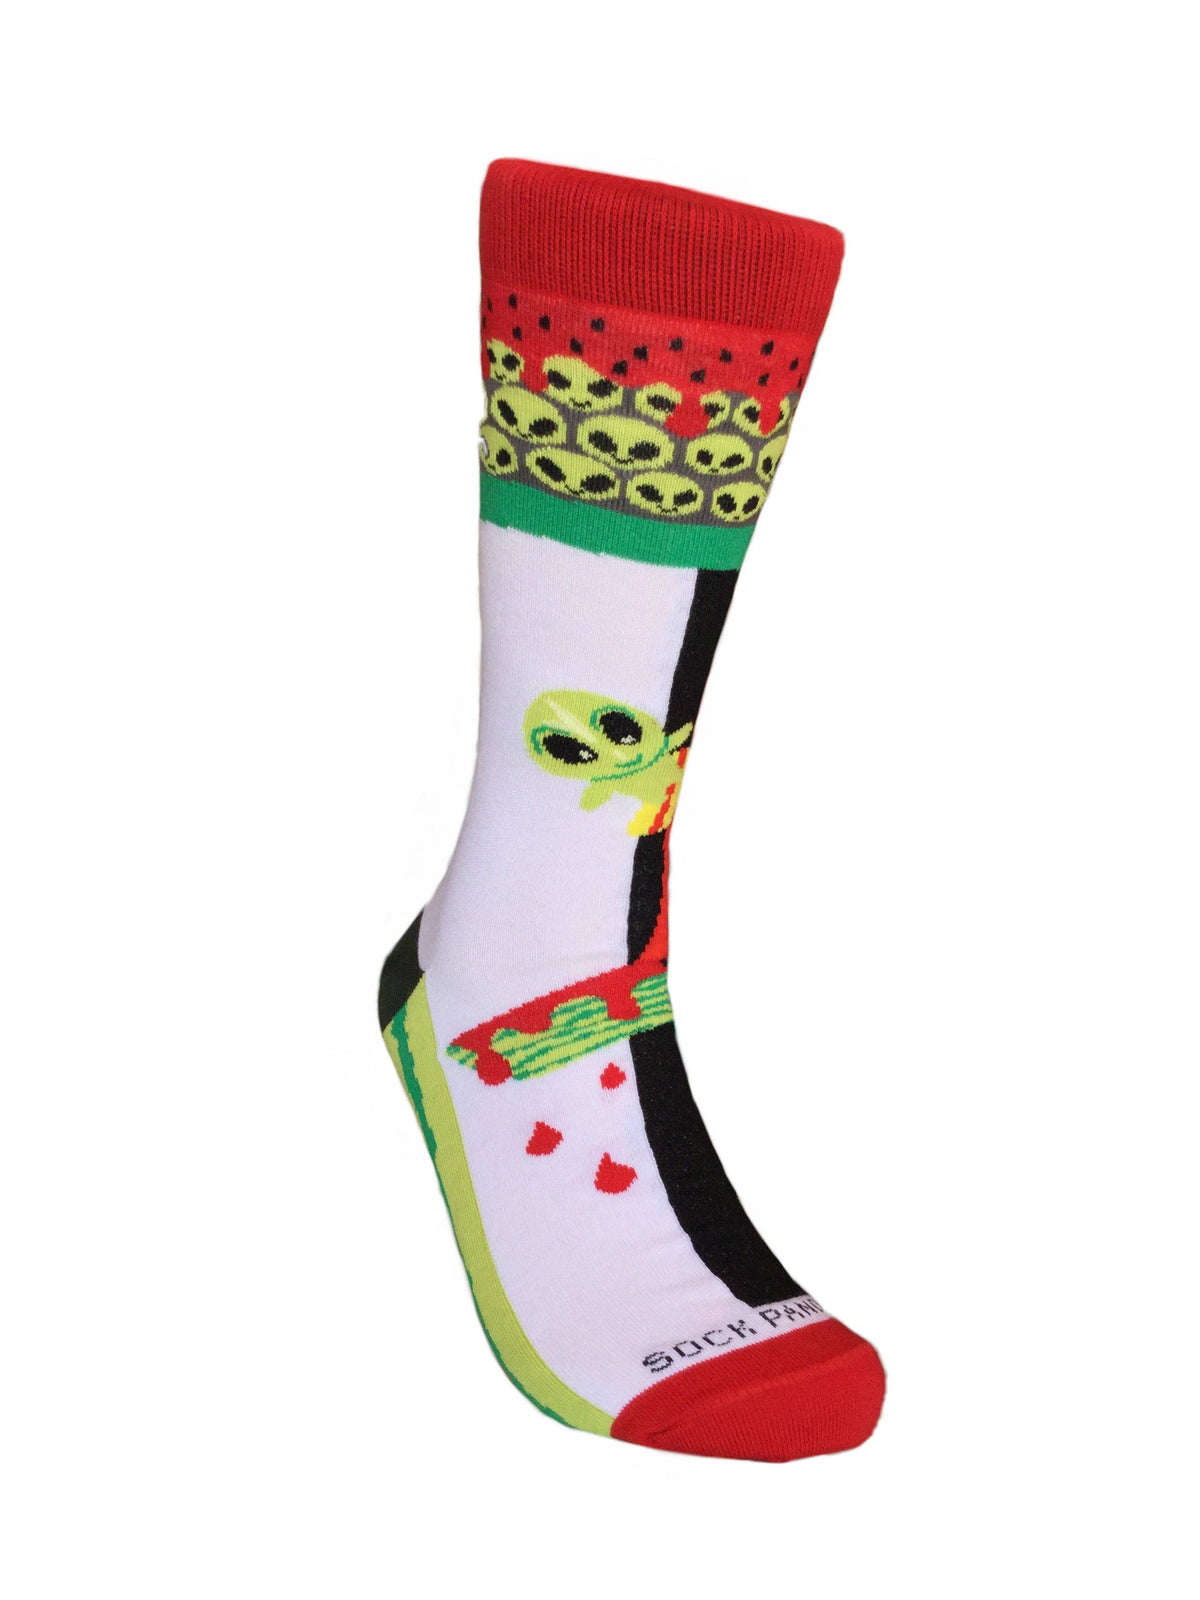 Sock Panda - Skater Alien on a Half Pike Watermelon Socks (Adult Large)